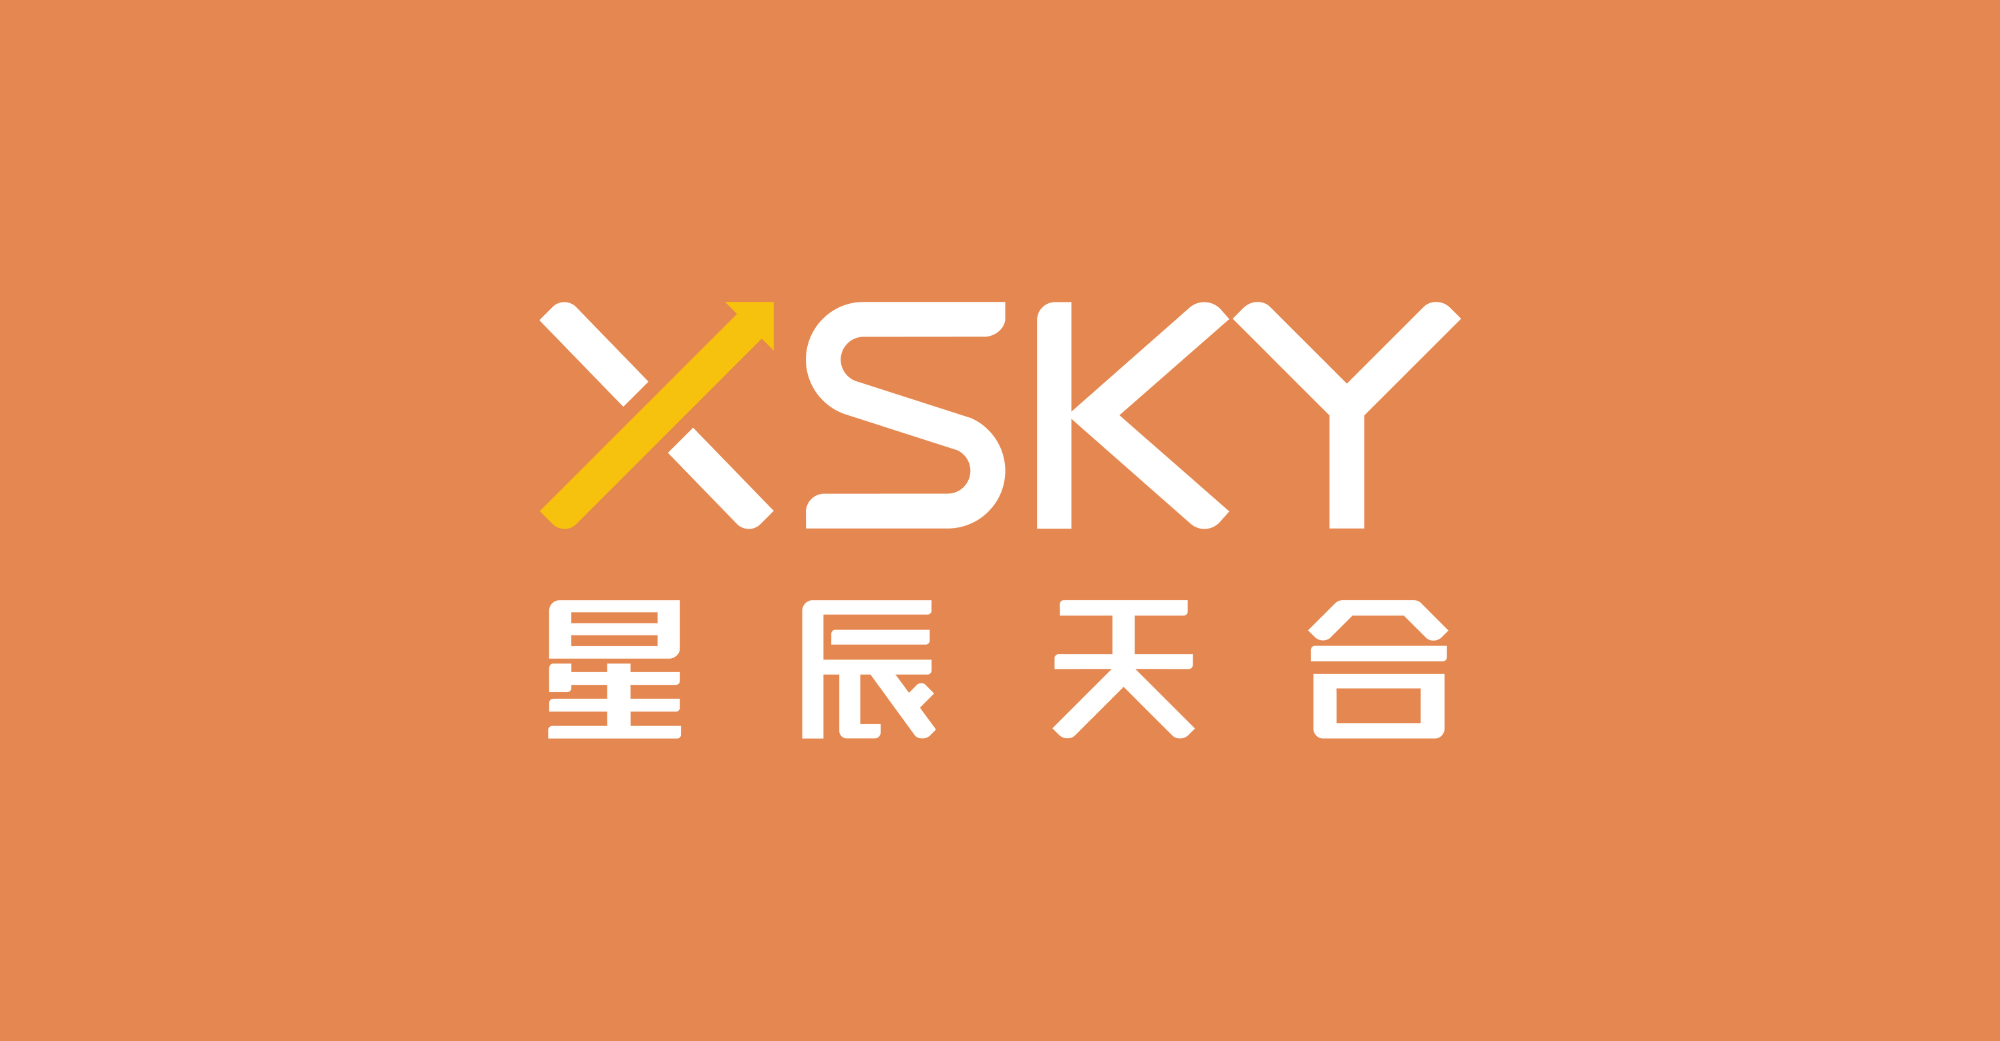 XSky သည် round F ရန်ပုံငွေ အတွက်ဒေါ်လာ ၆၂. ၈ သန်း ရရှိခဲ့ပြီး Source Capital သည် ရင်းနှီးမြှုပ်နှံ မှုတွင်ပါ ၀ င်သည်